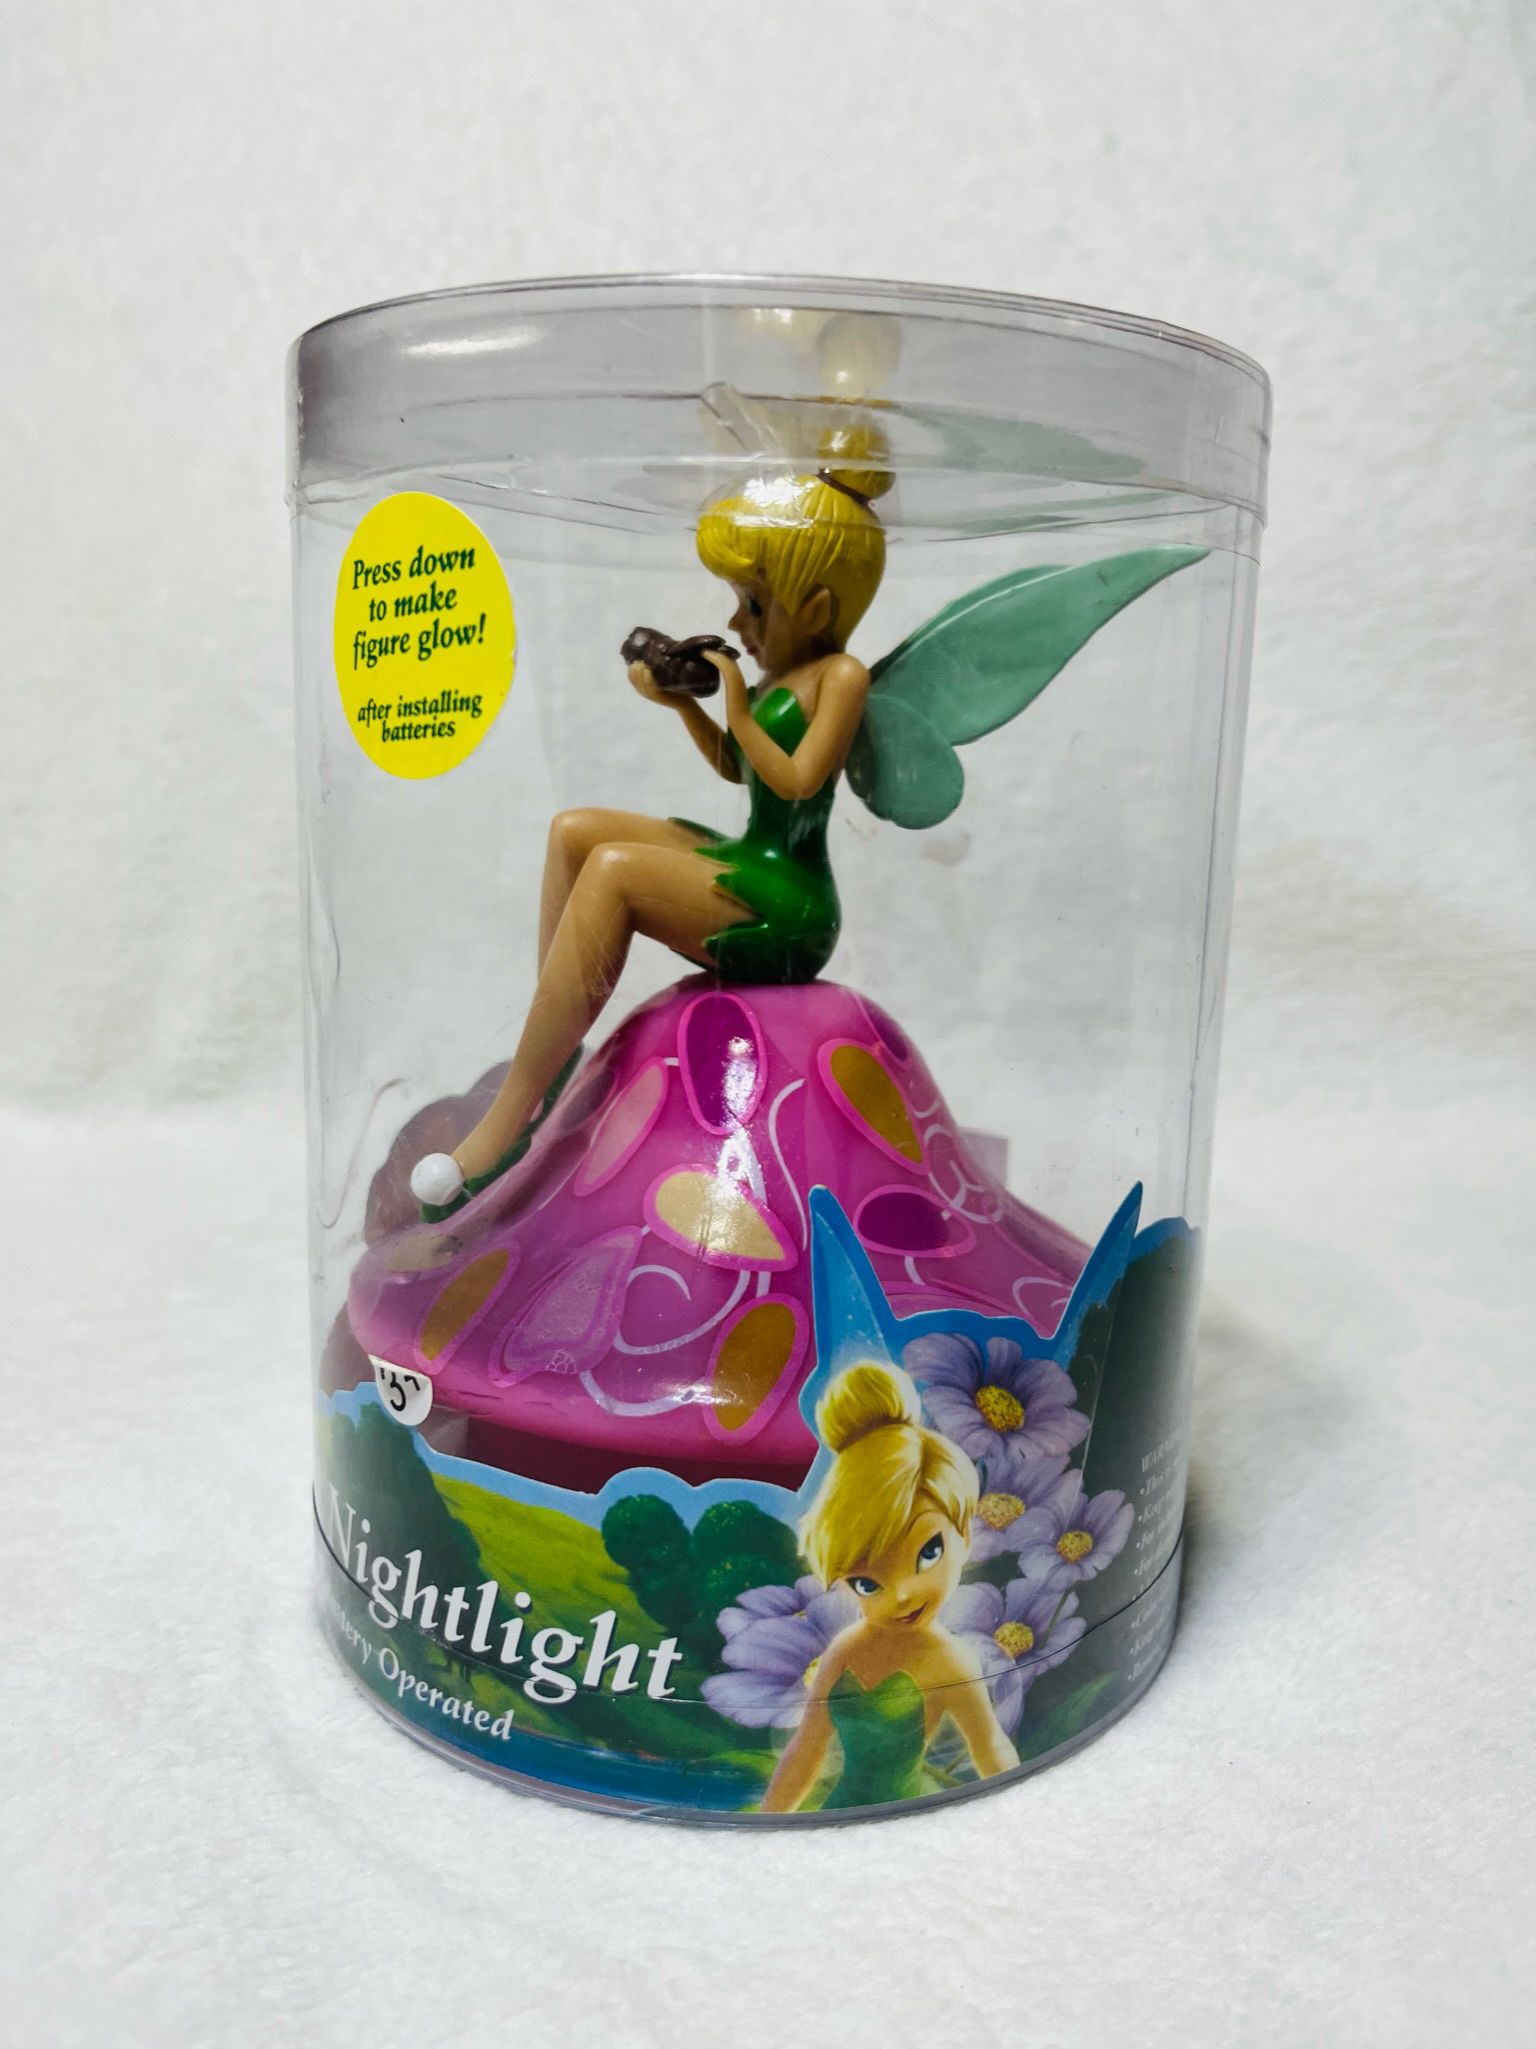 2000s Disney Fairies Tinkerbell Figural Nightlight